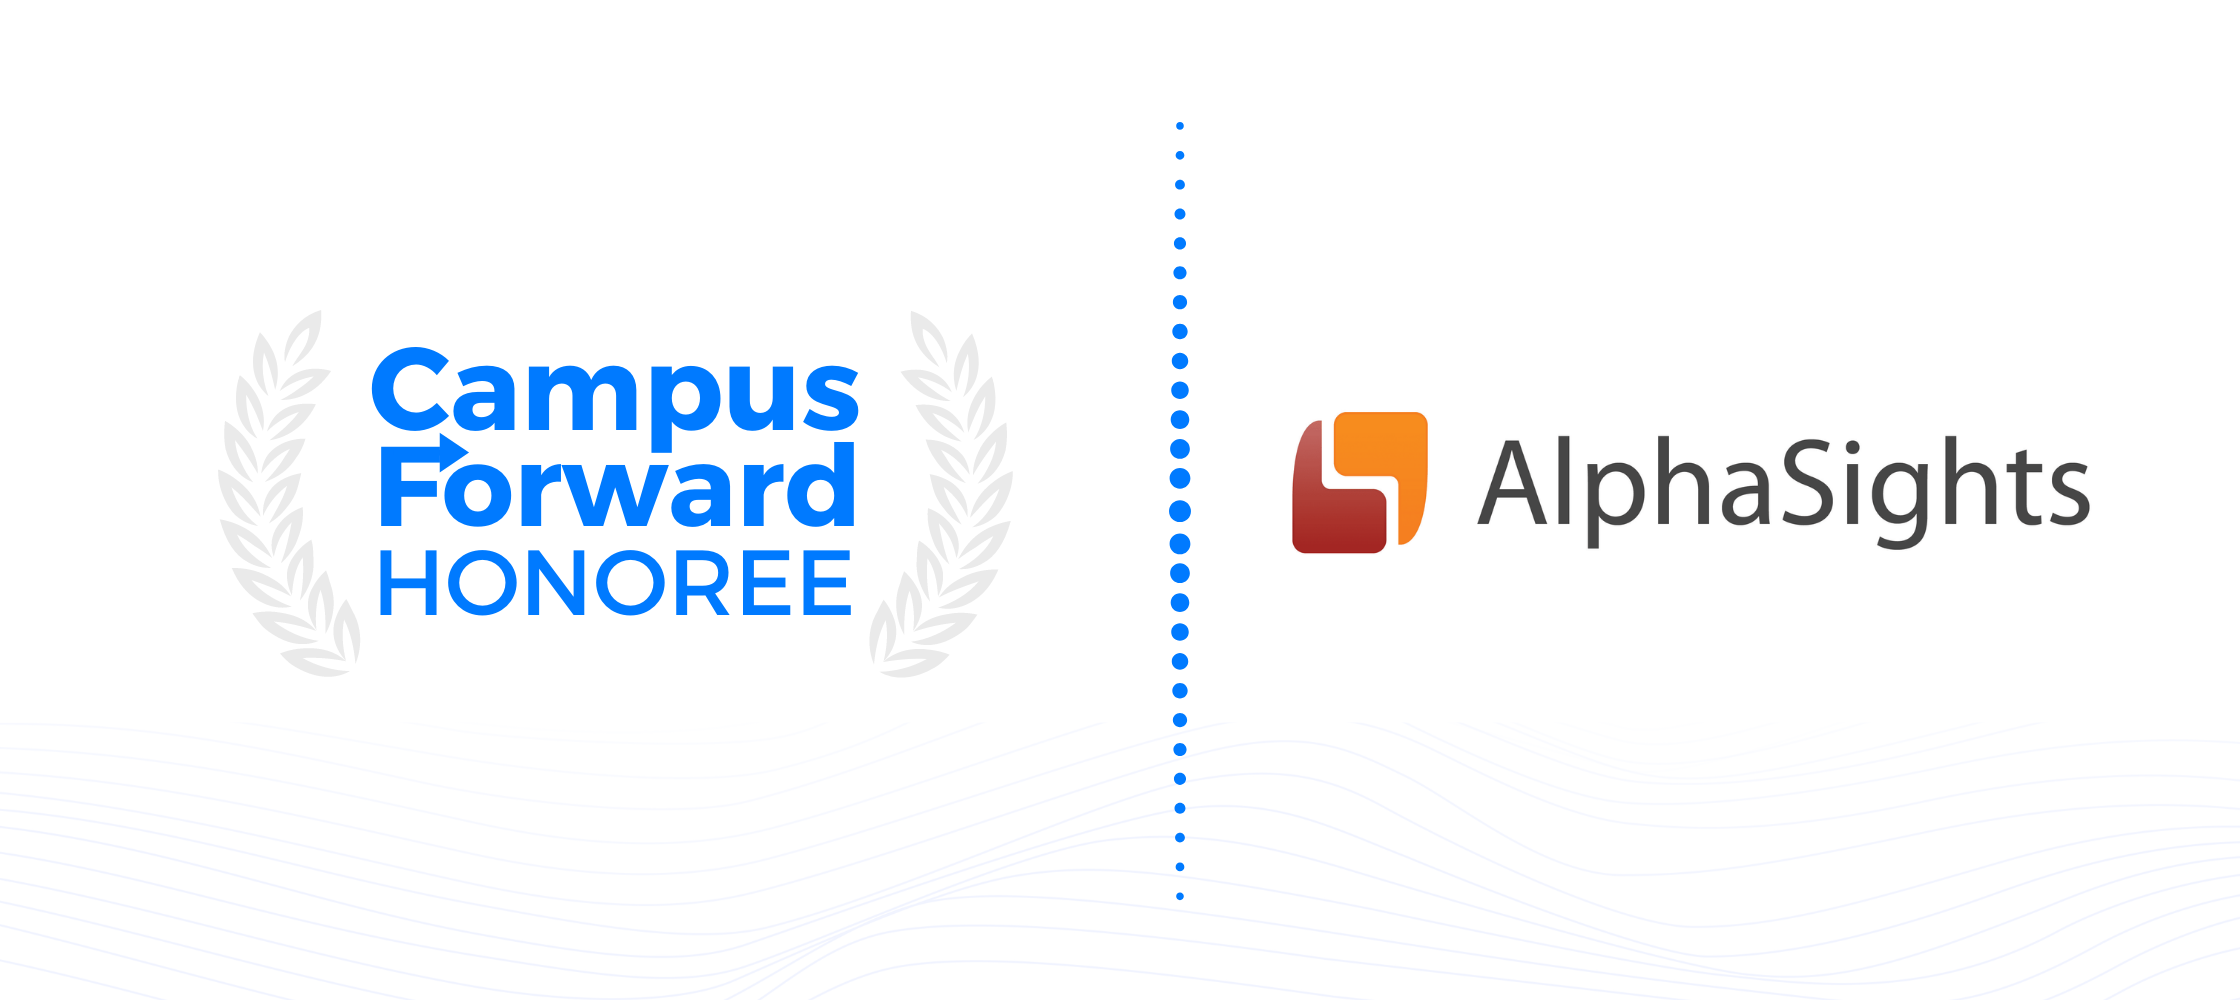 Campus Forward Honoree - AlphaSights